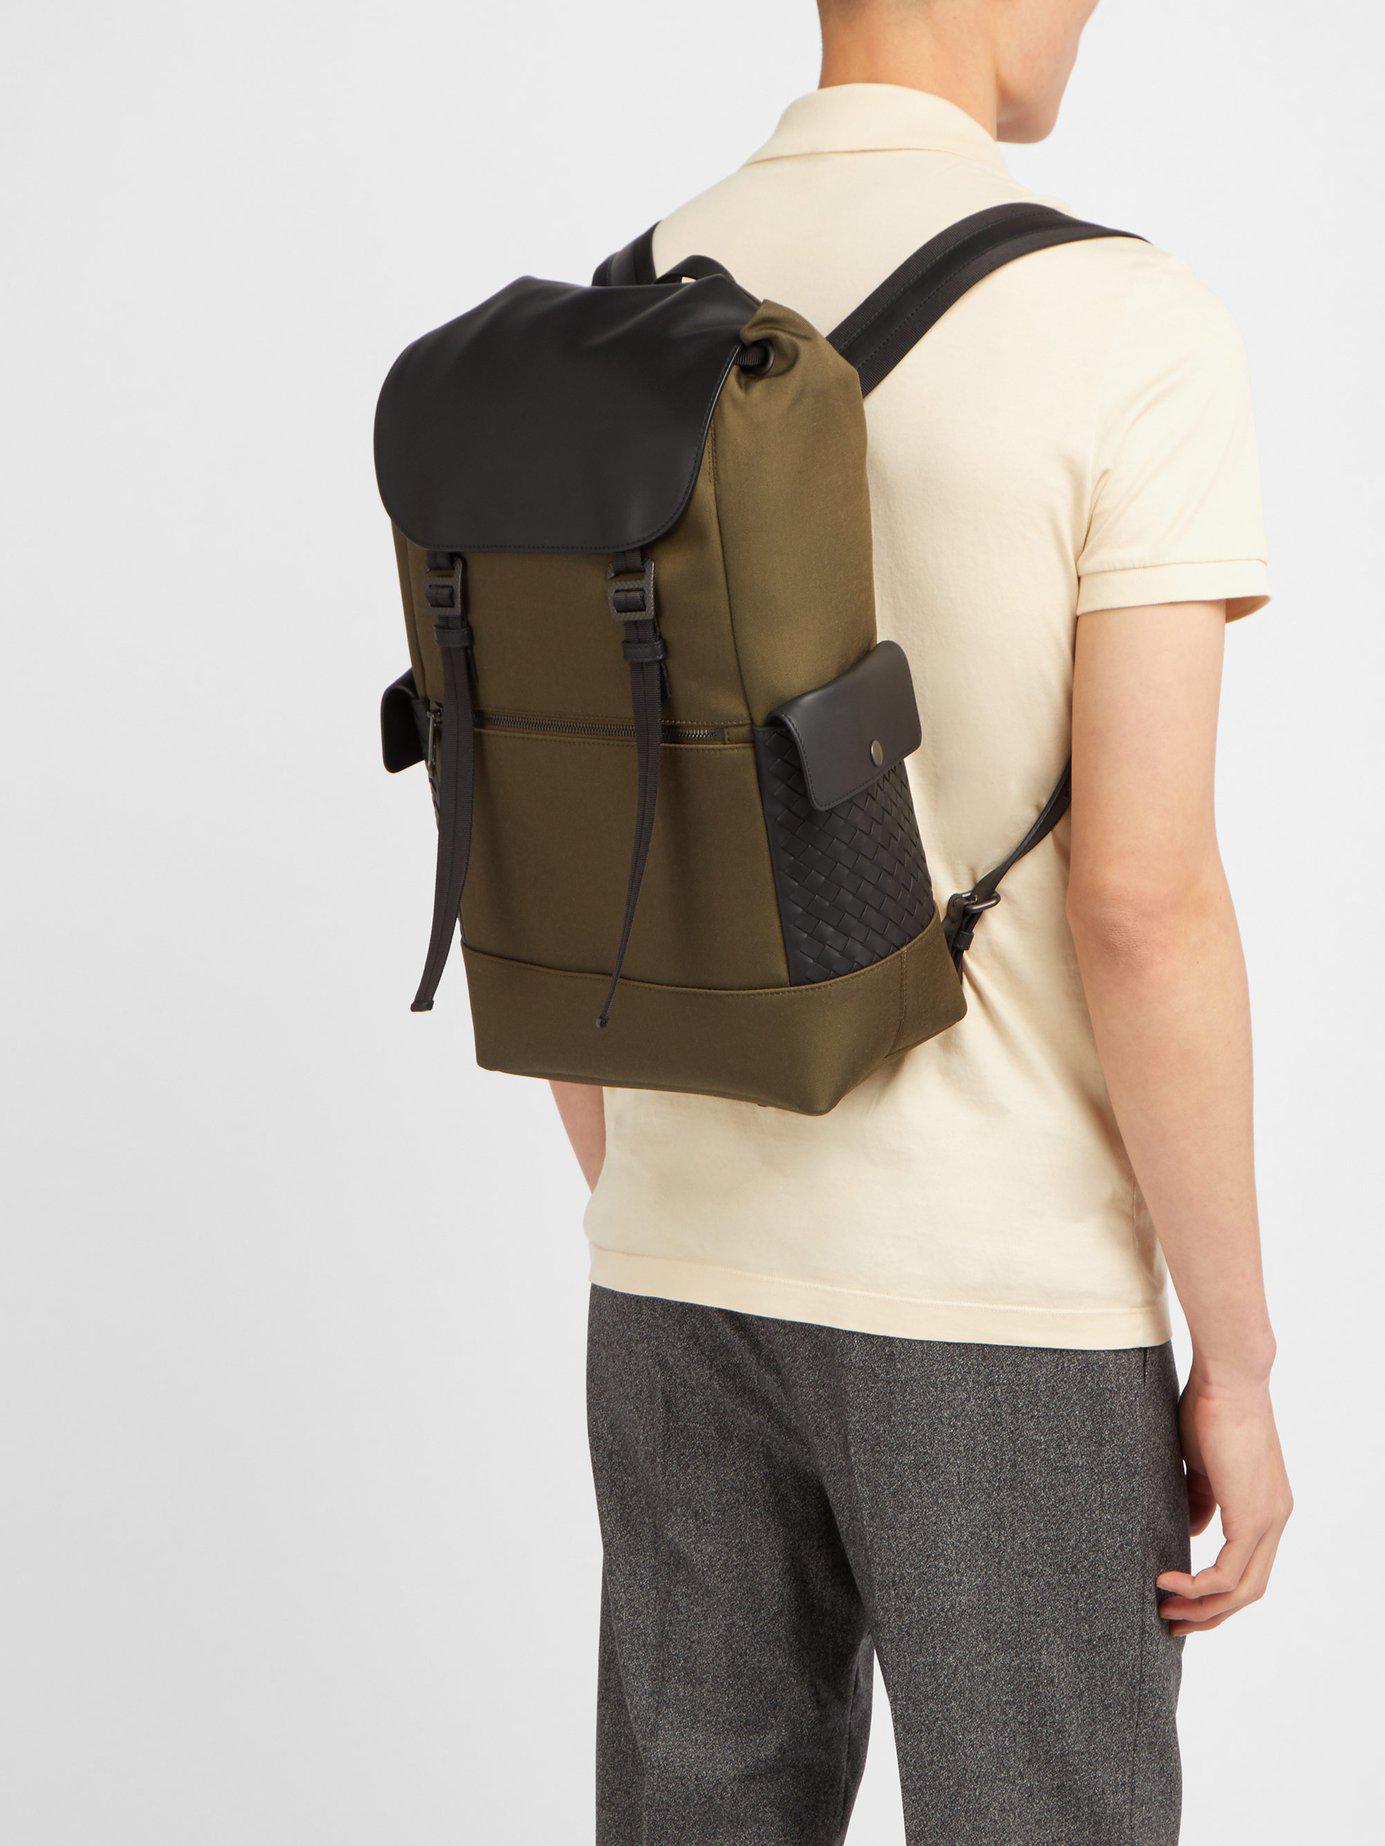 Bottega Veneta Sassolungo Canvas And Leather Backpack for Men - Lyst